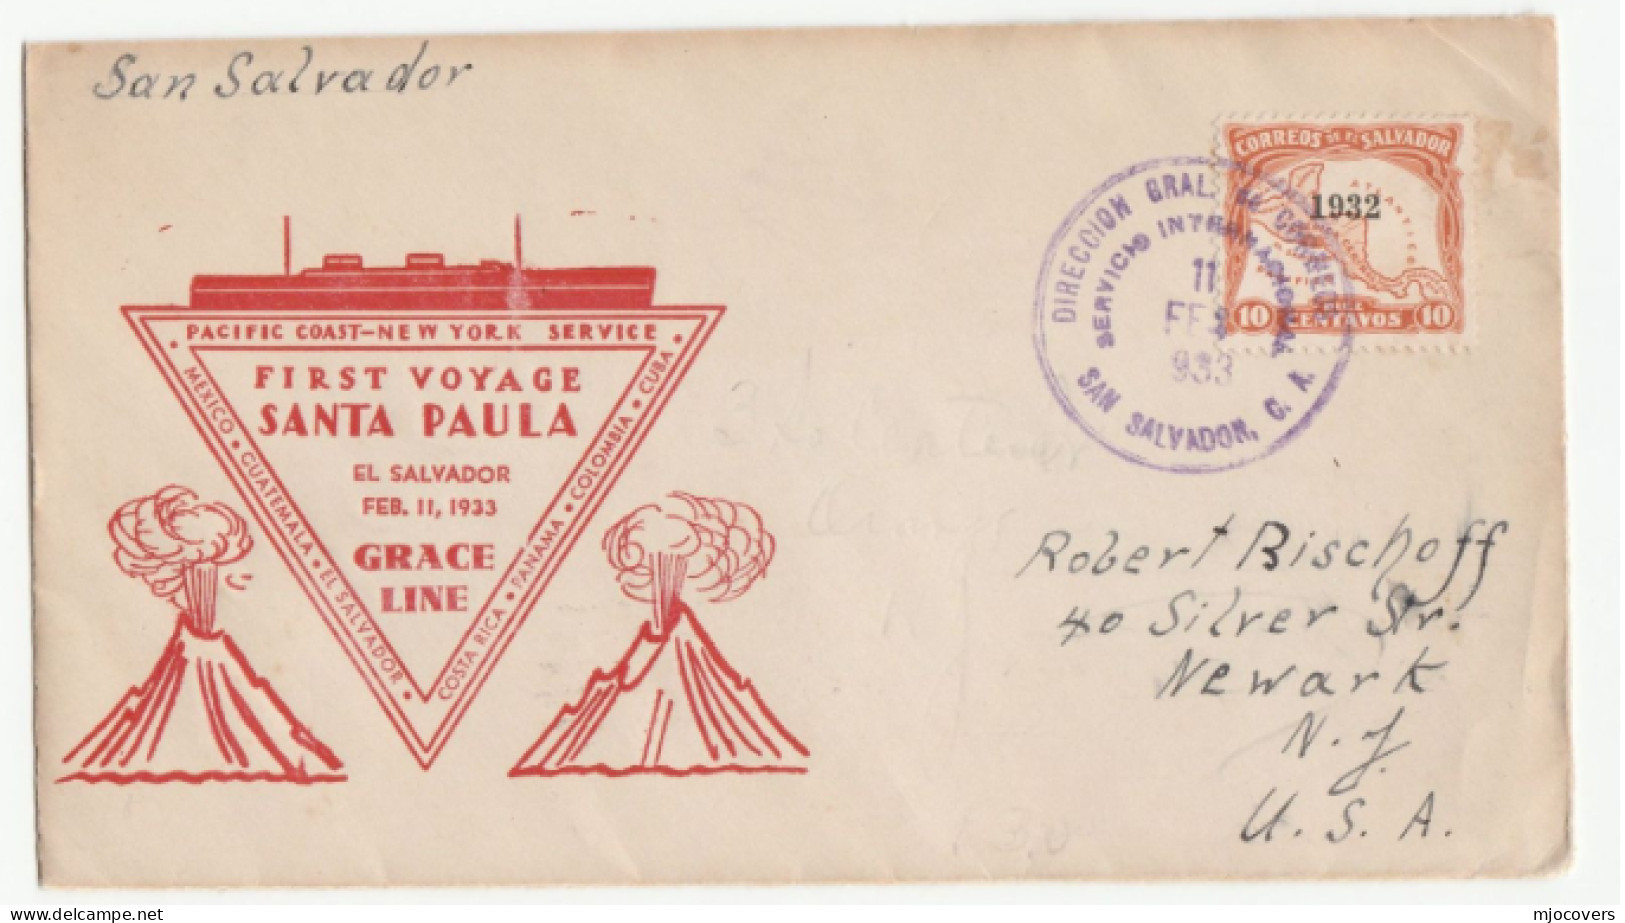 ERUPTING  VOLCANO 1933 Pacific Coast EL SALVADOR  First VOYAGE Ship SANTA PAULA  Grace Line To USA Cover Stamps - Volcanos